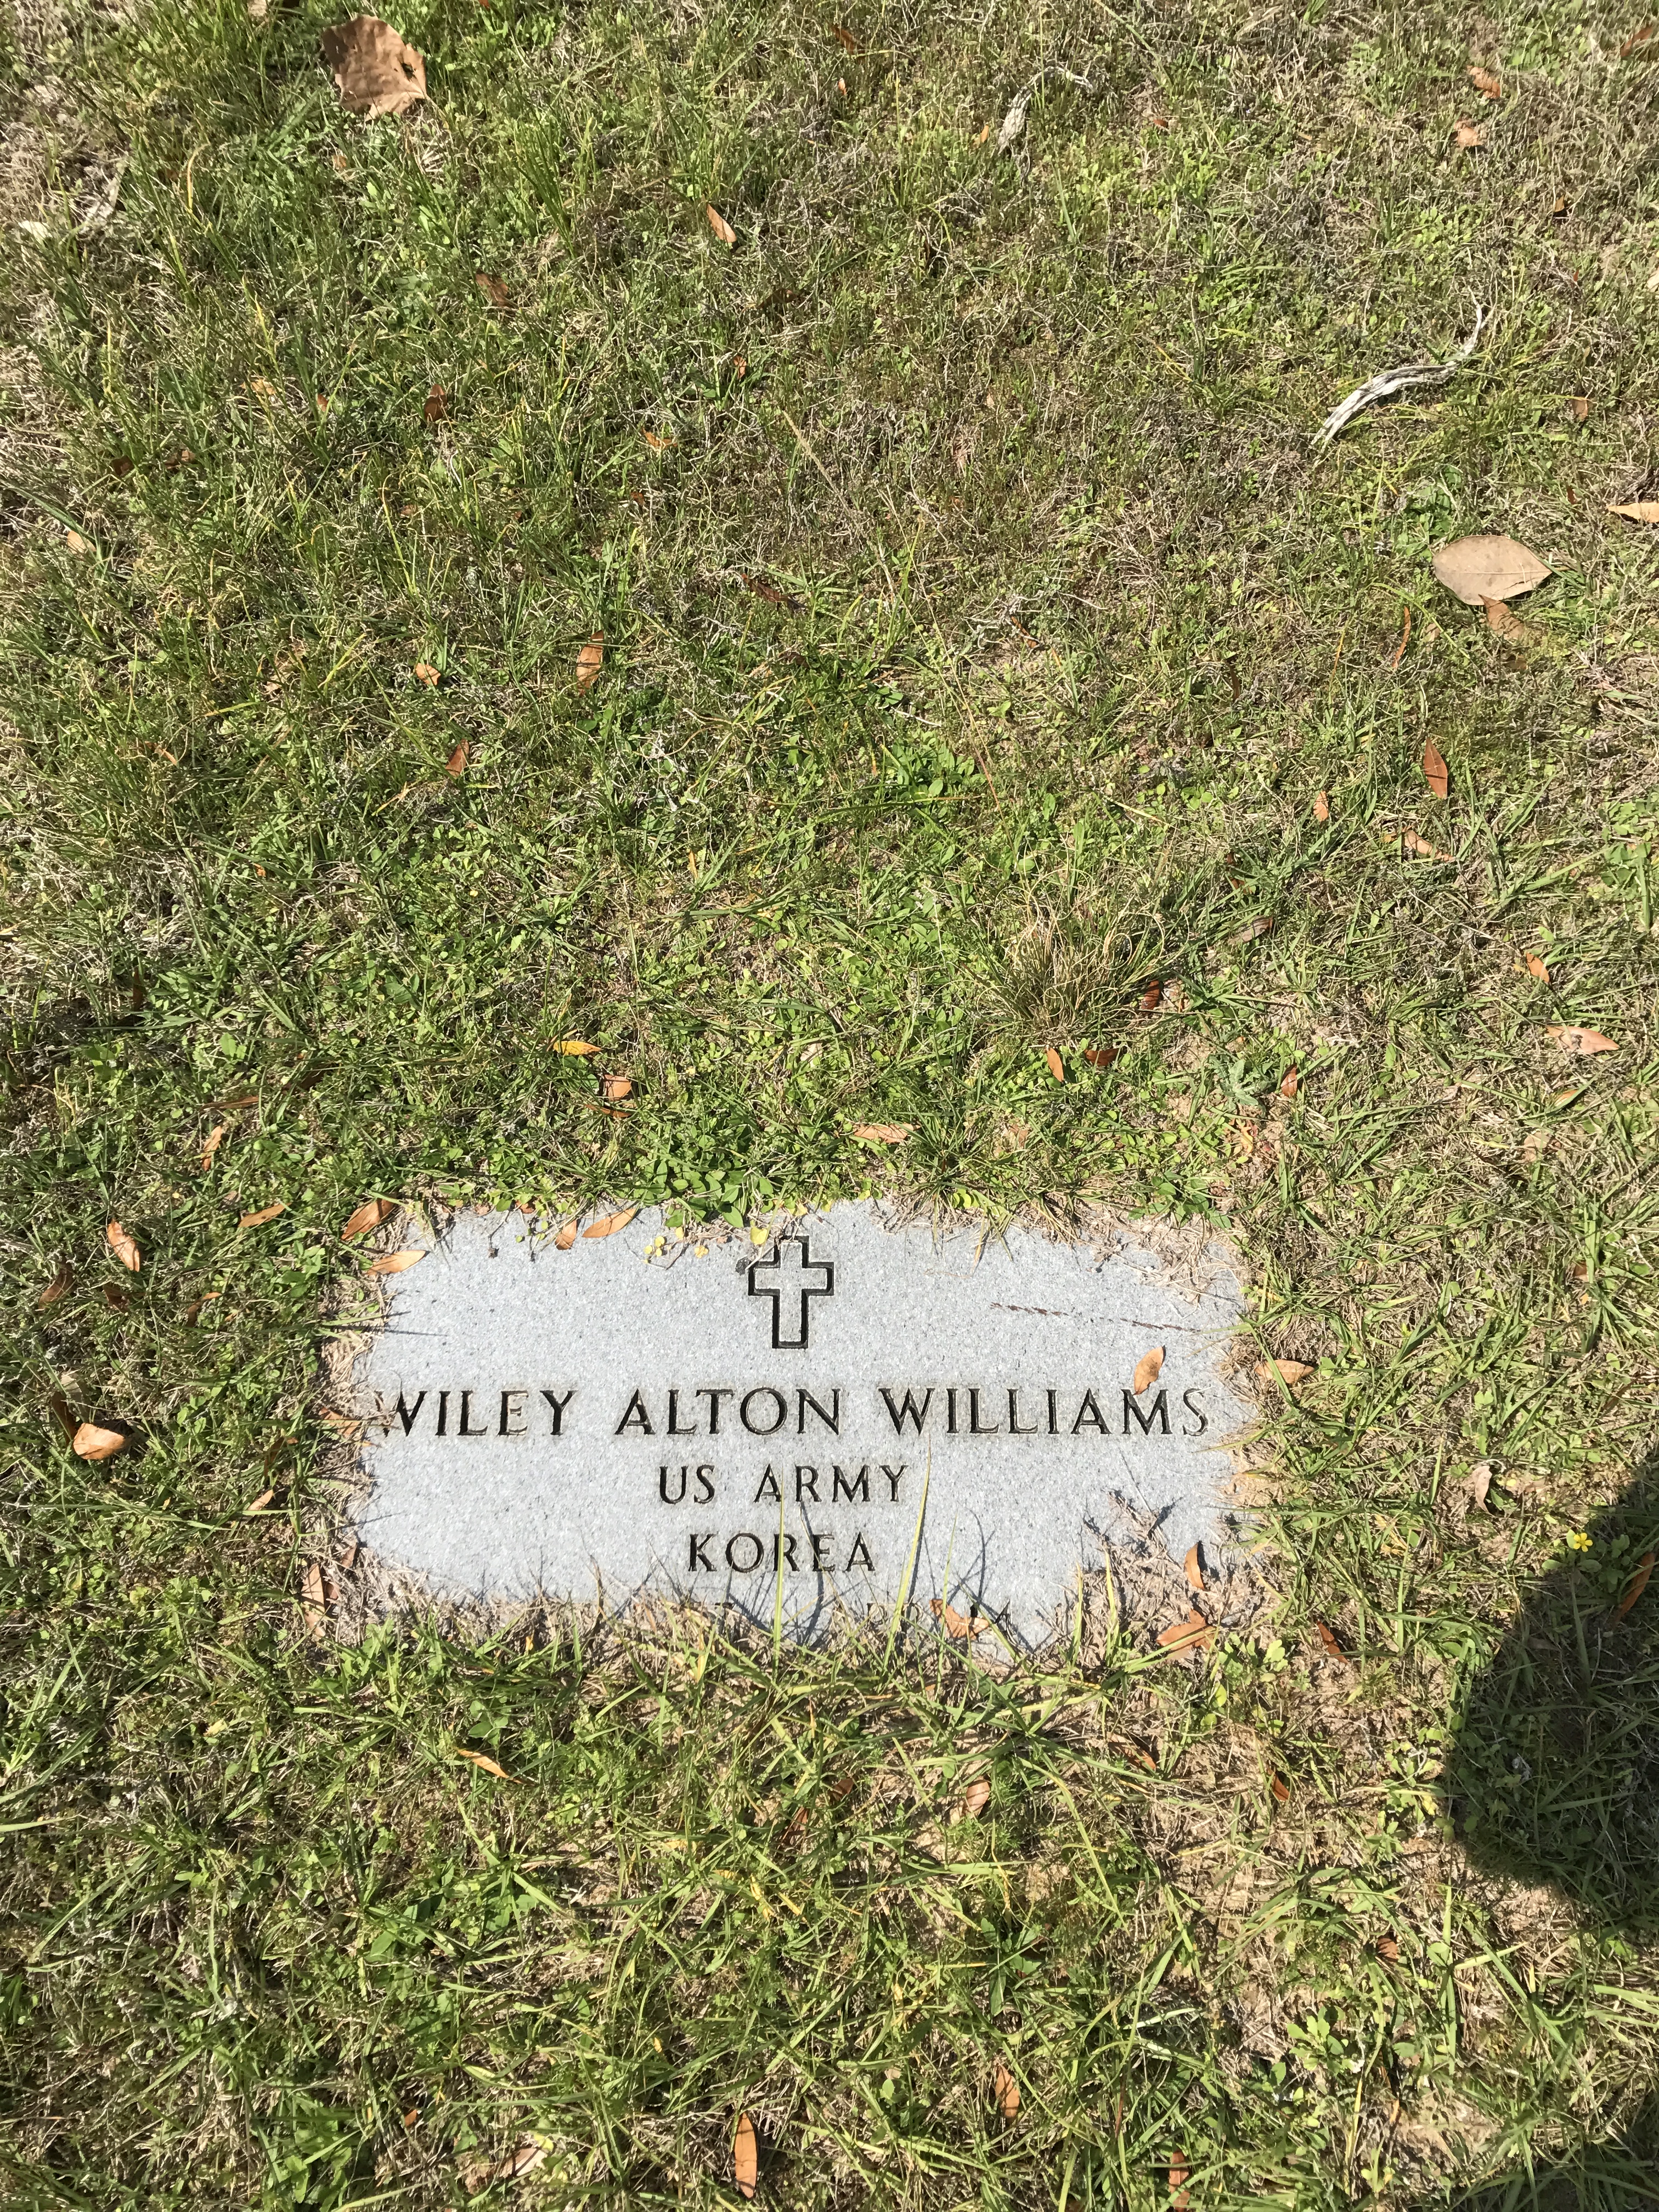 Wiley Alton Williams